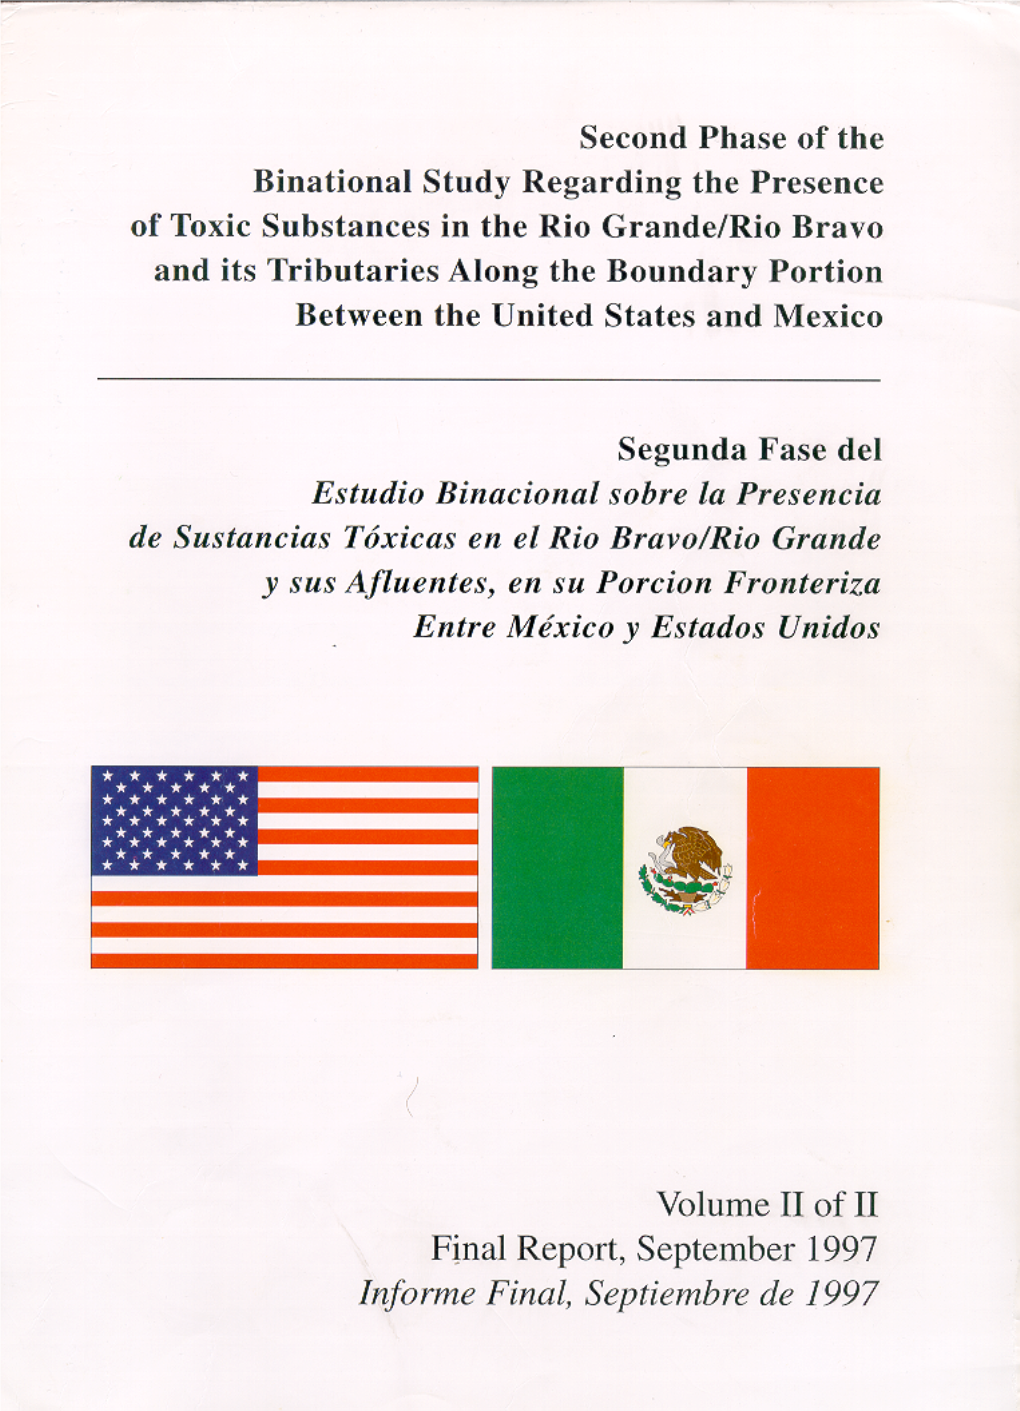 Binational Rio Grande/Rio Bravo Toxic Substance Study